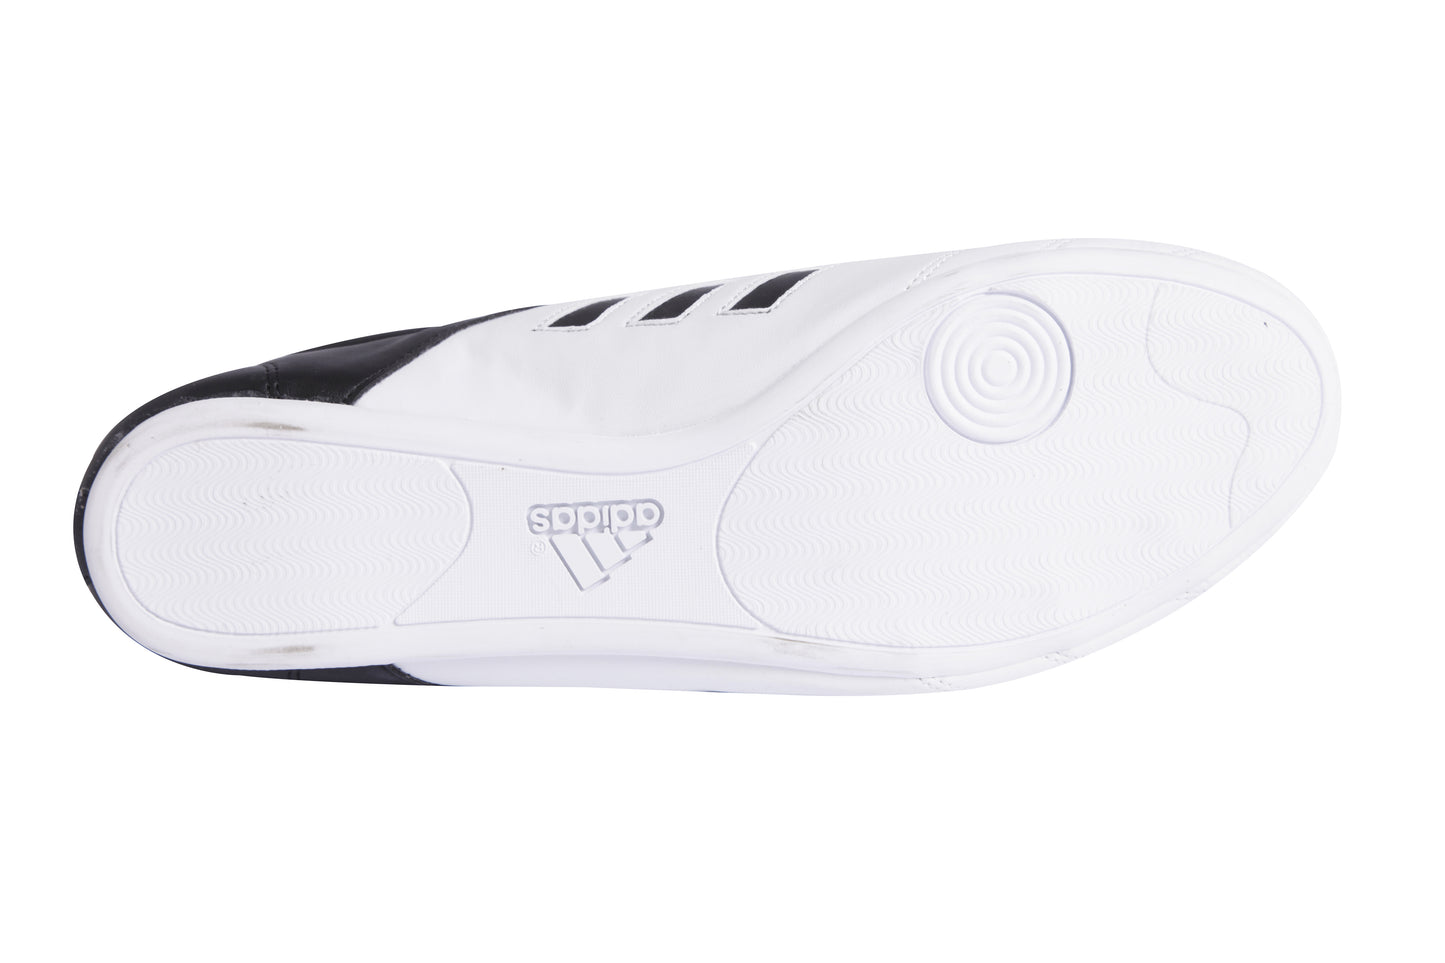 Chaussures de Taekwondo Adikick Adidas - Blanc/Noir